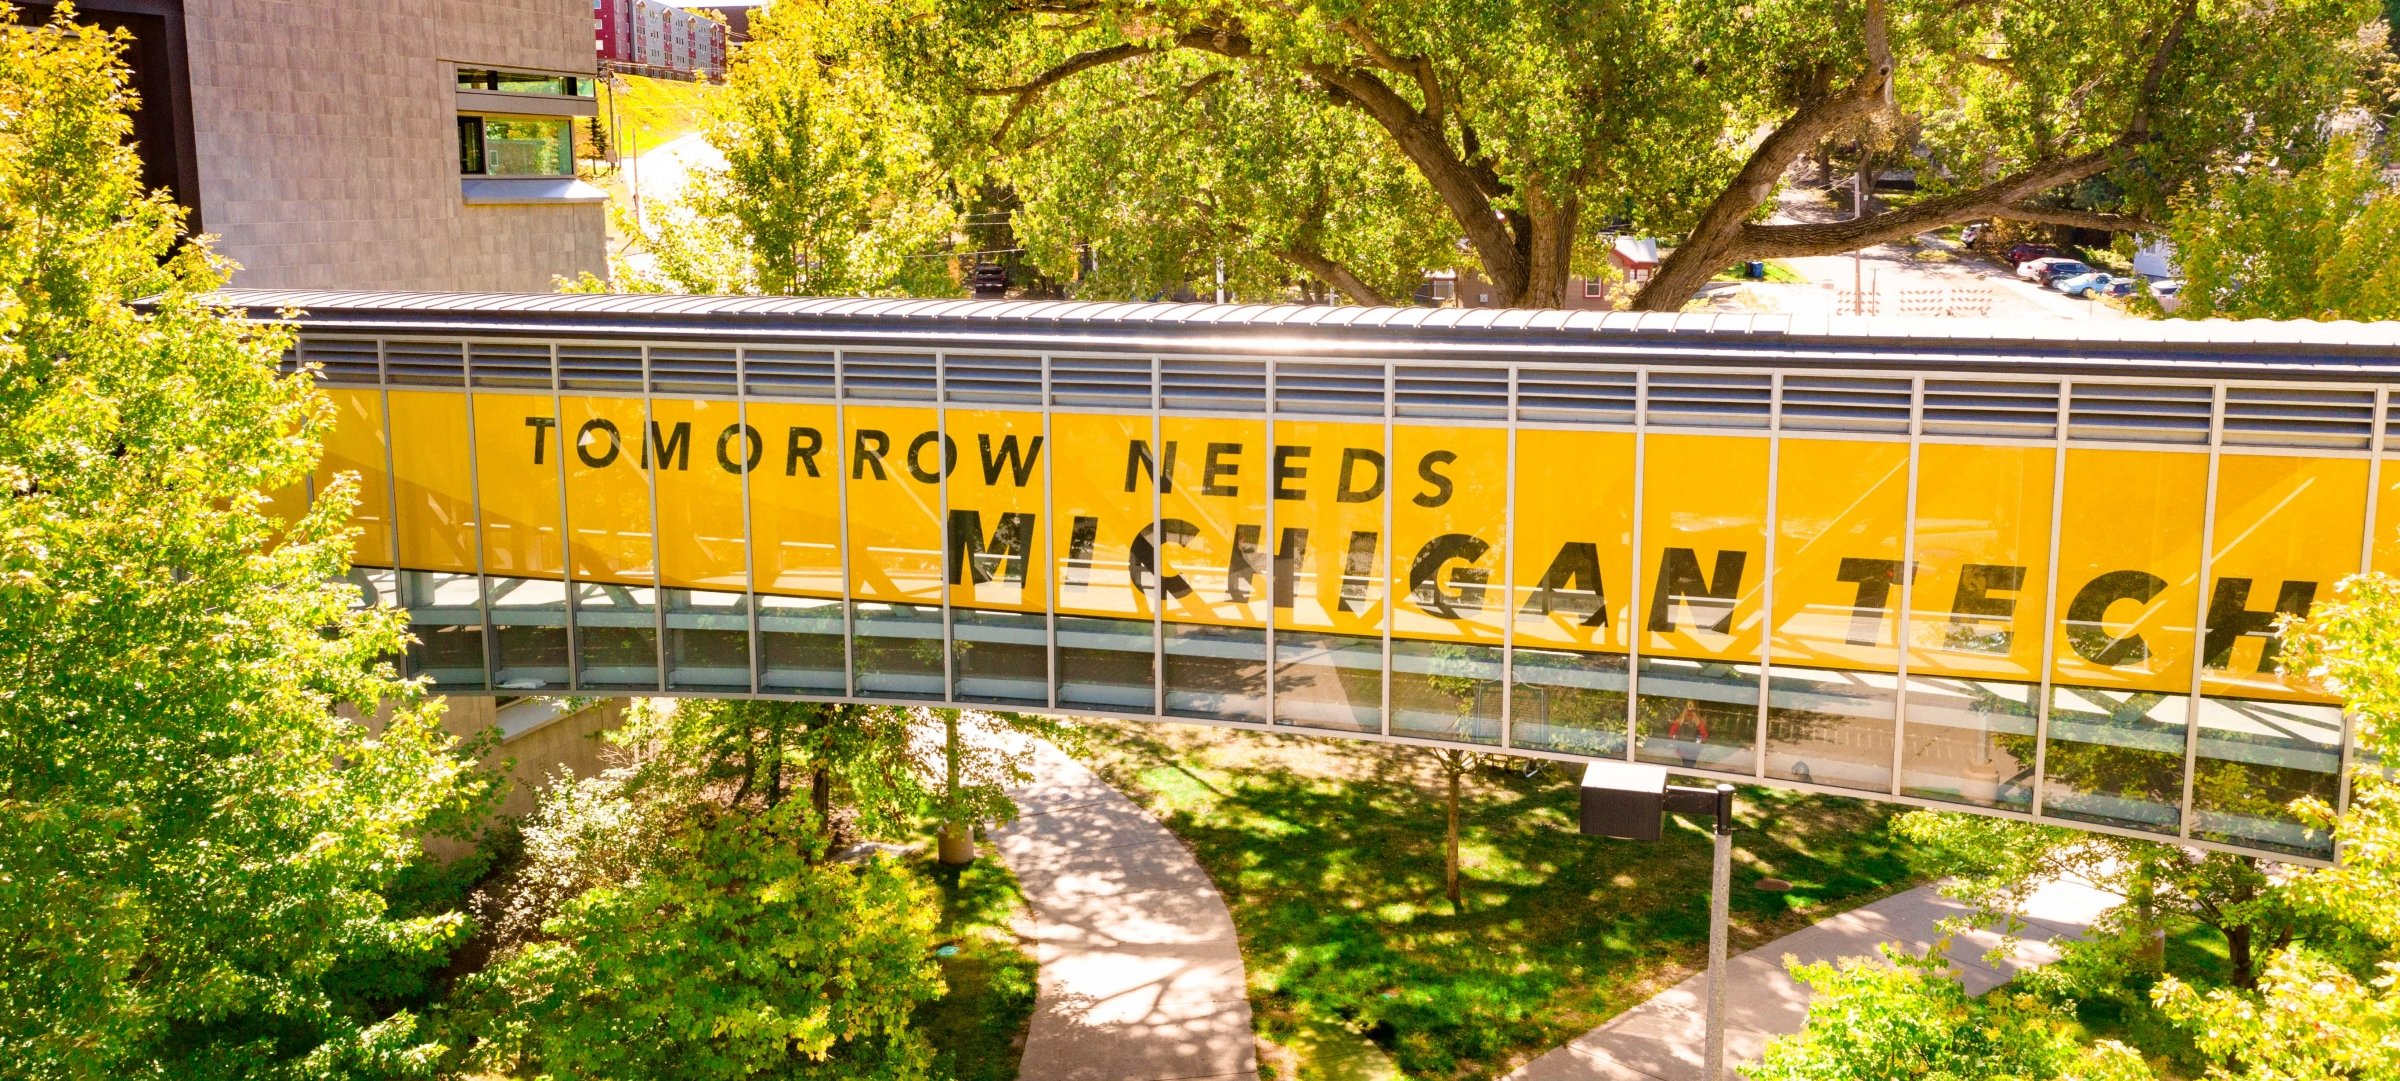 Walkway across campus with "Tomorrow needs Michigan Tech" slogan on the windows of the walkway. 